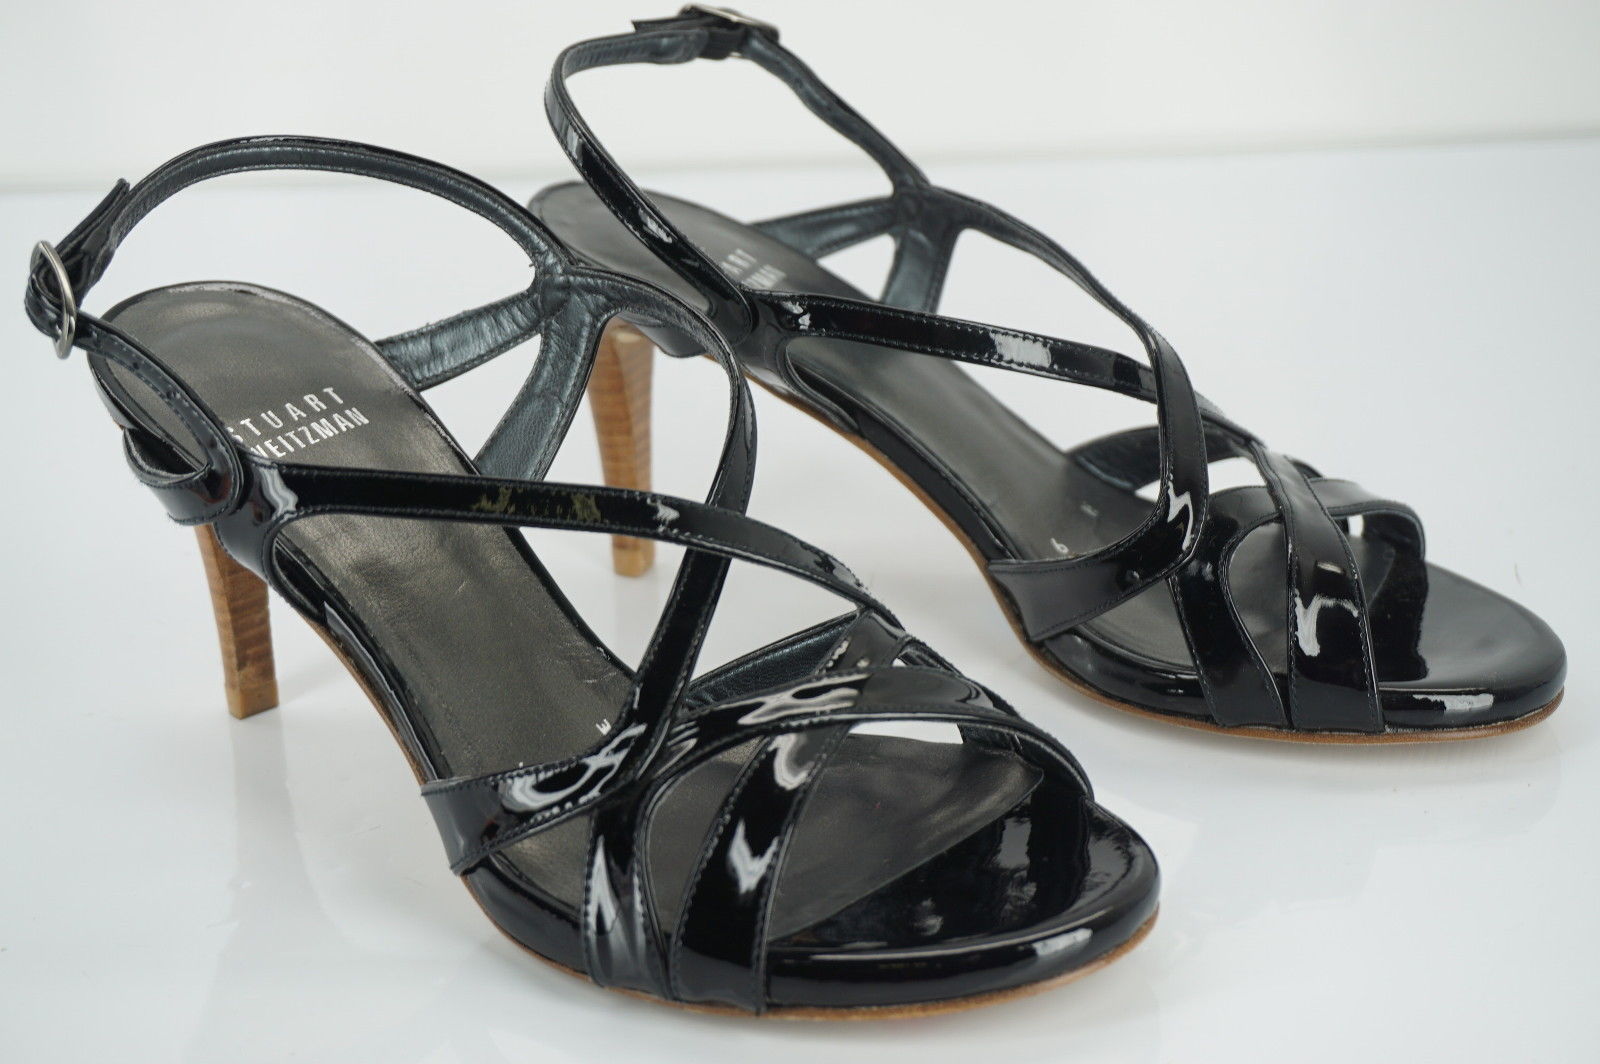 Stuart Weitzman Black Patent Leather Operetta Strappy Sandals SZ 6 Wide NIB $375